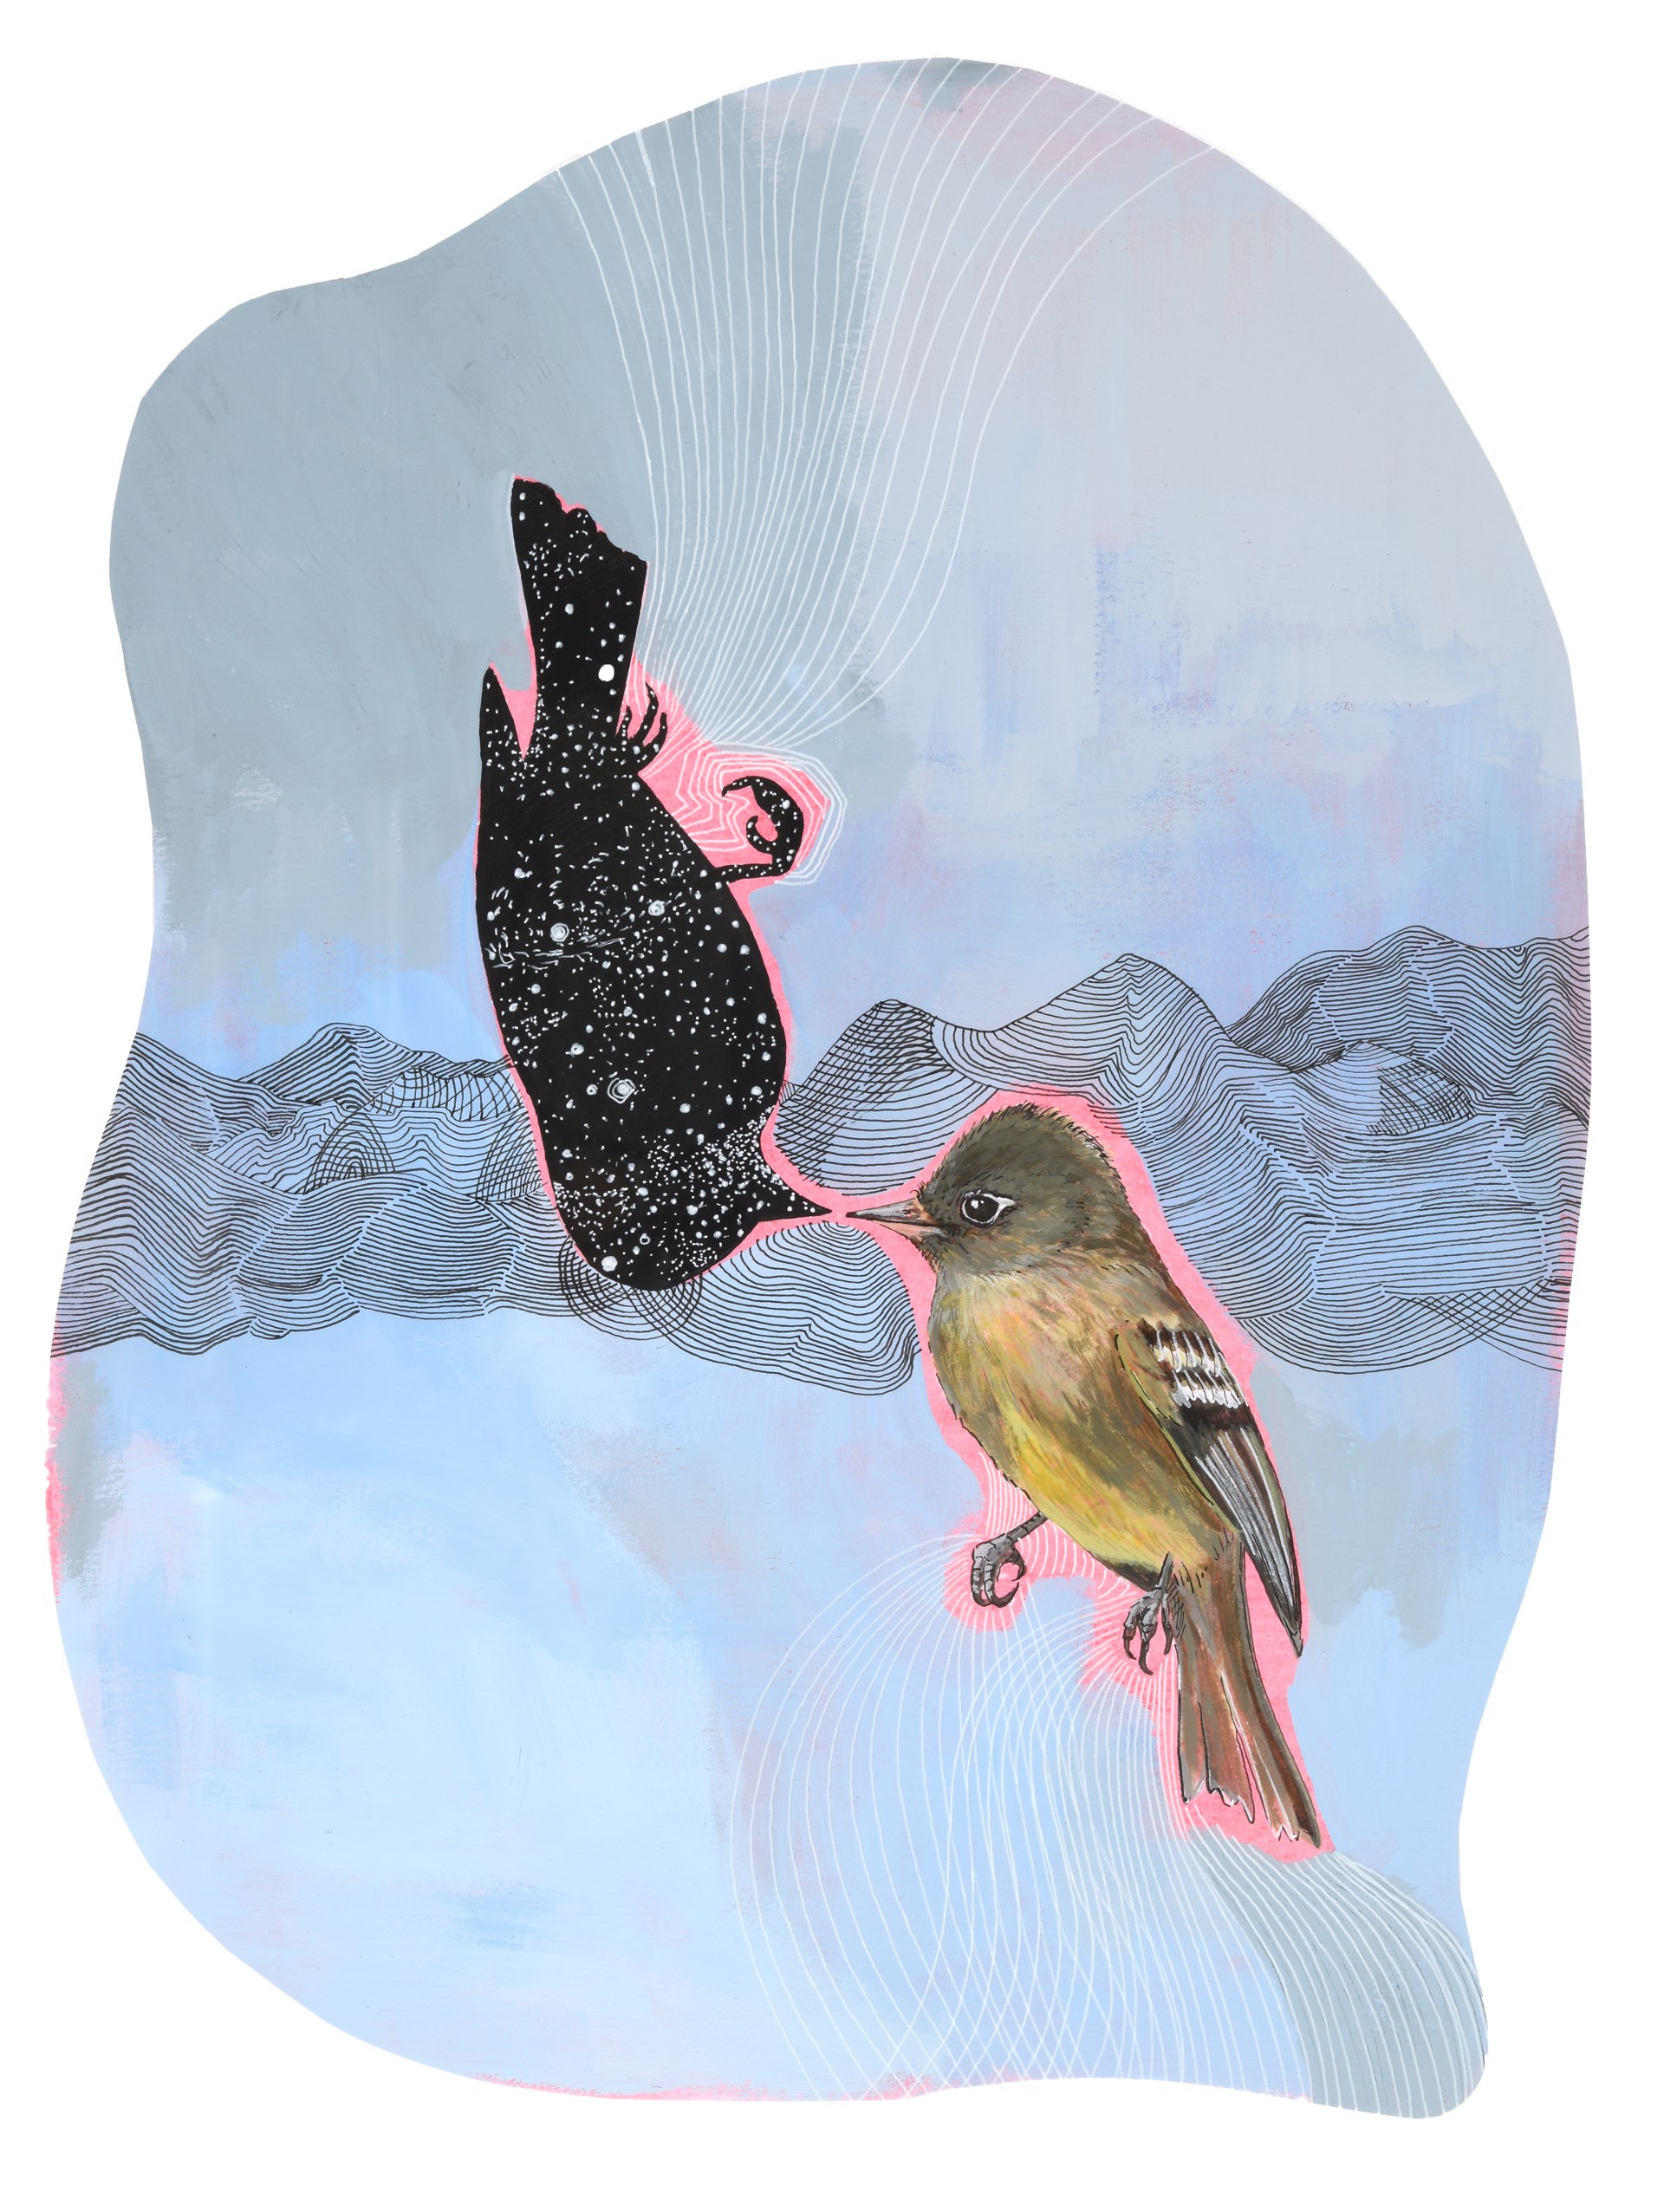 Disappearing Birds of North America: Cordilleran Flycatcher by Kirsten Furlong